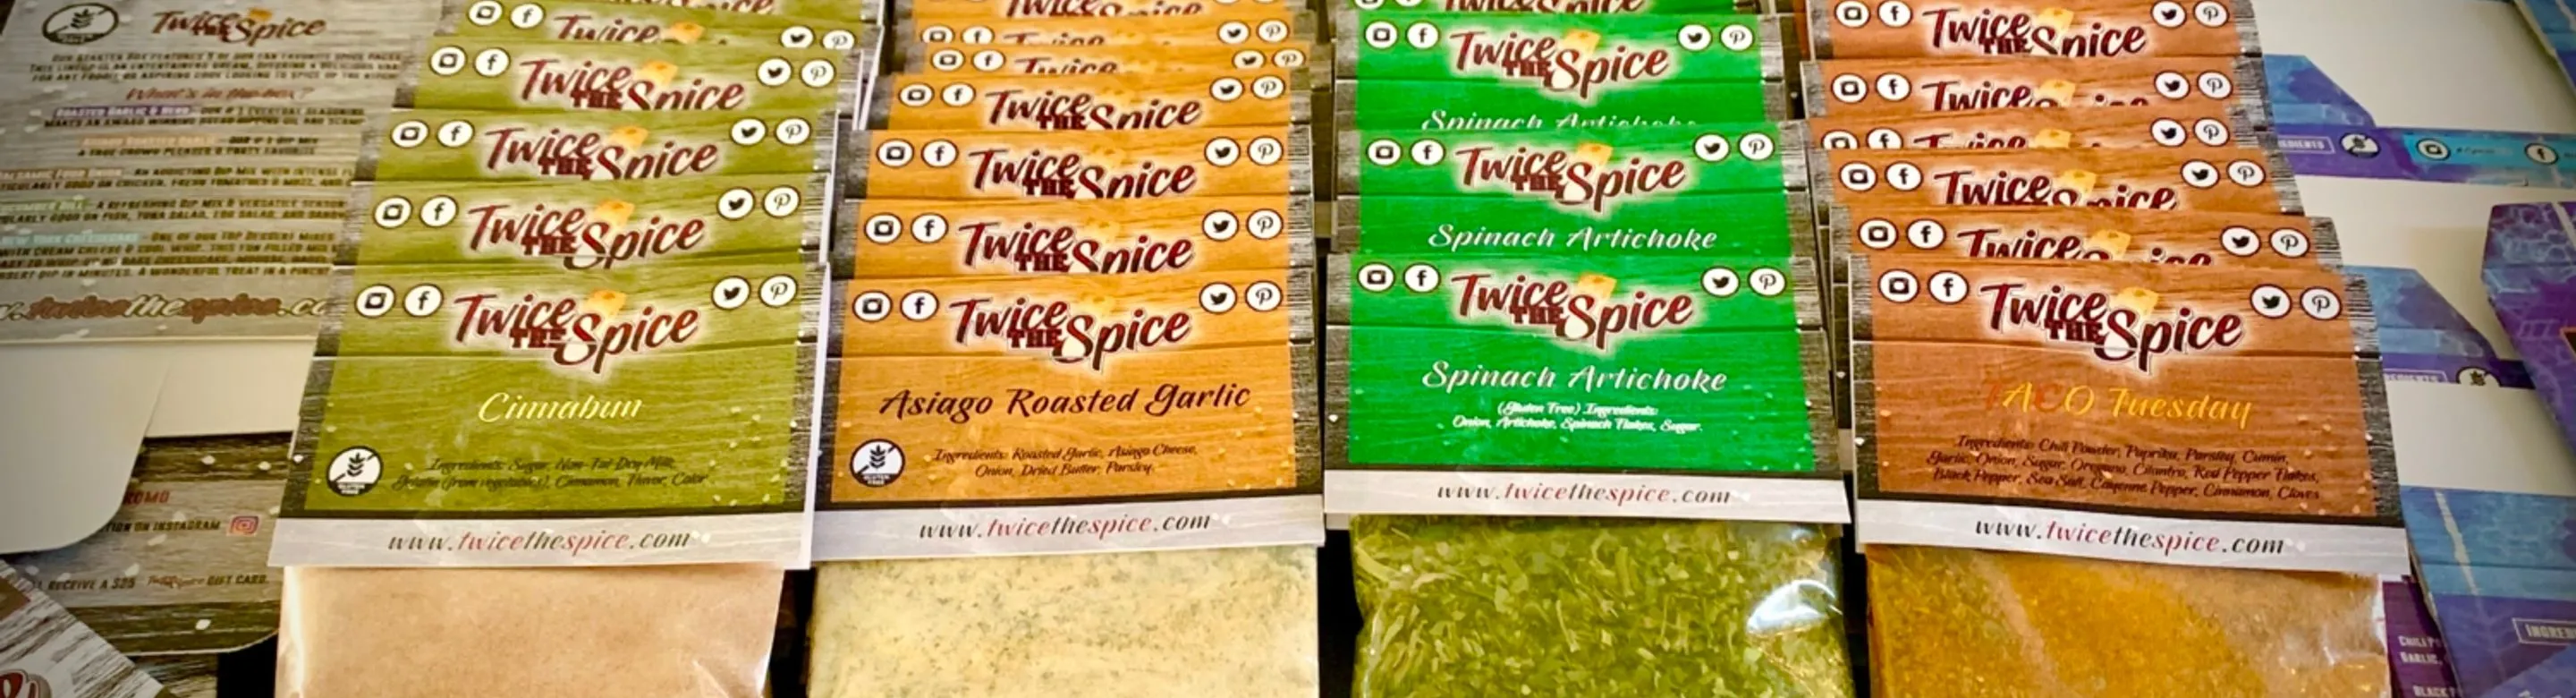 Twice the Spice LLC